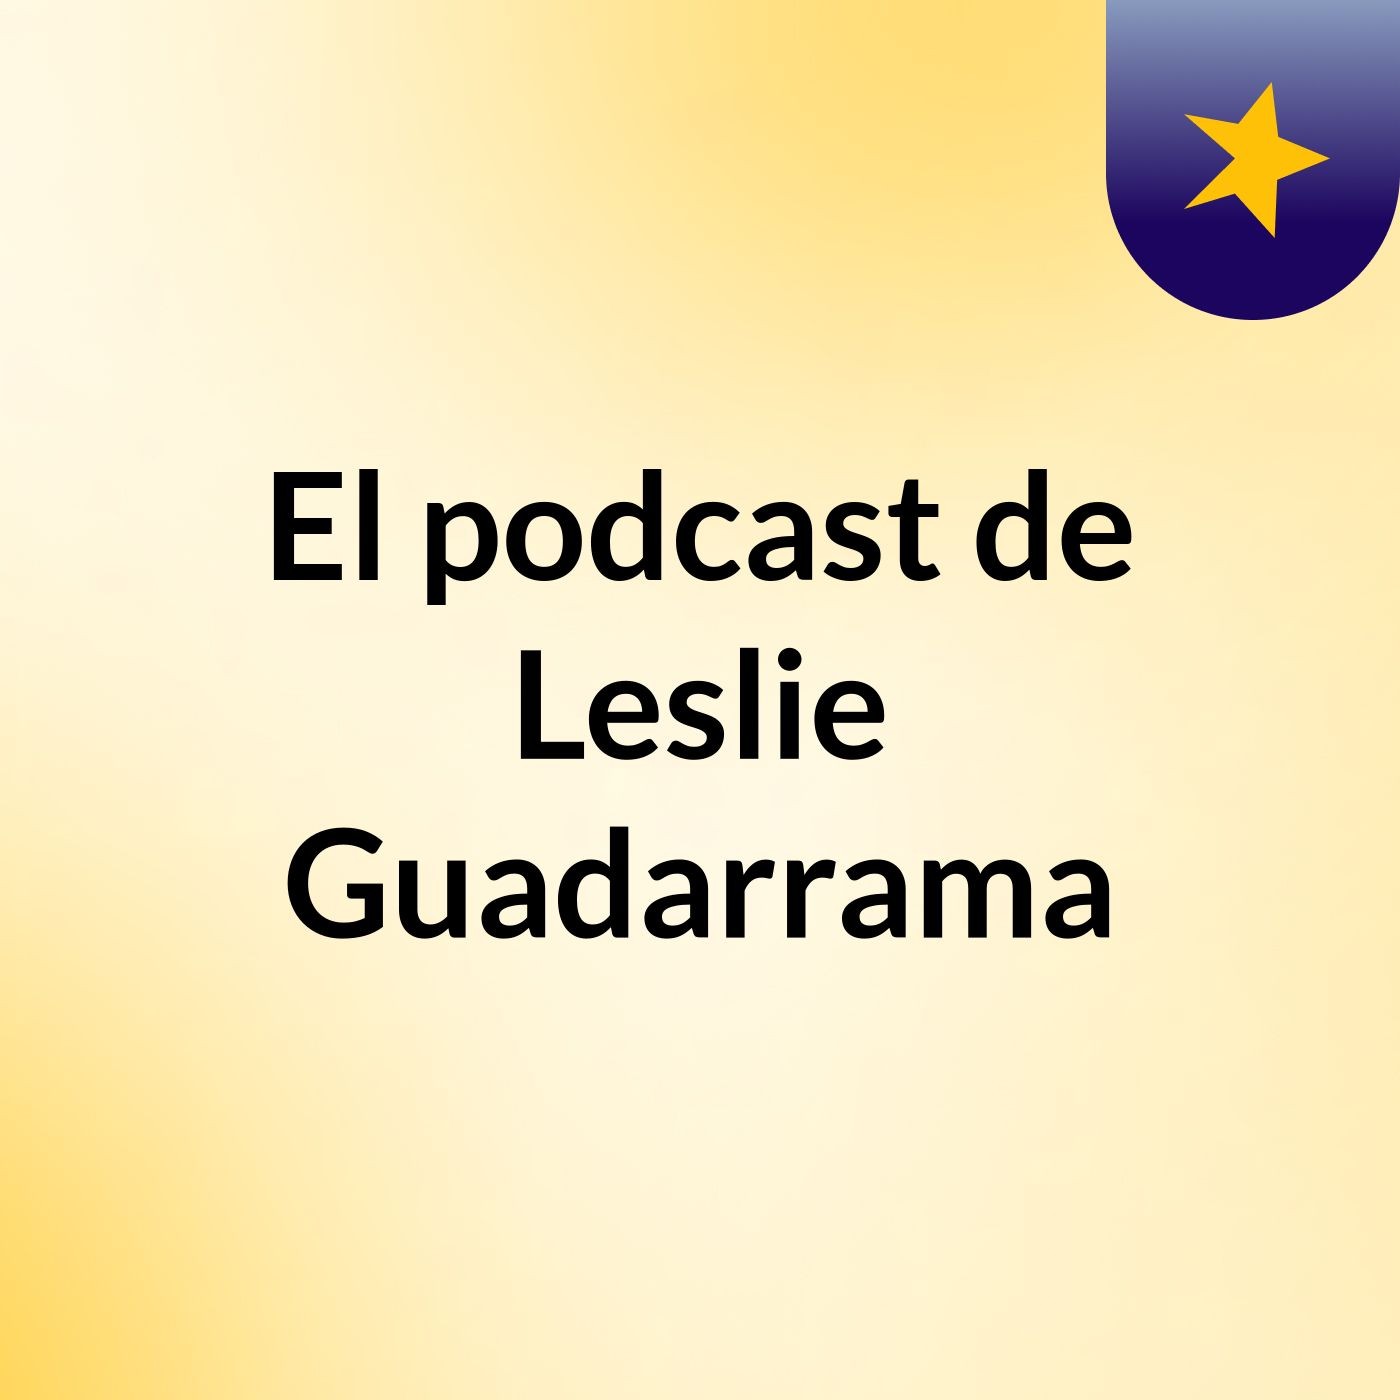 El podcast de Leslie Jerusalen